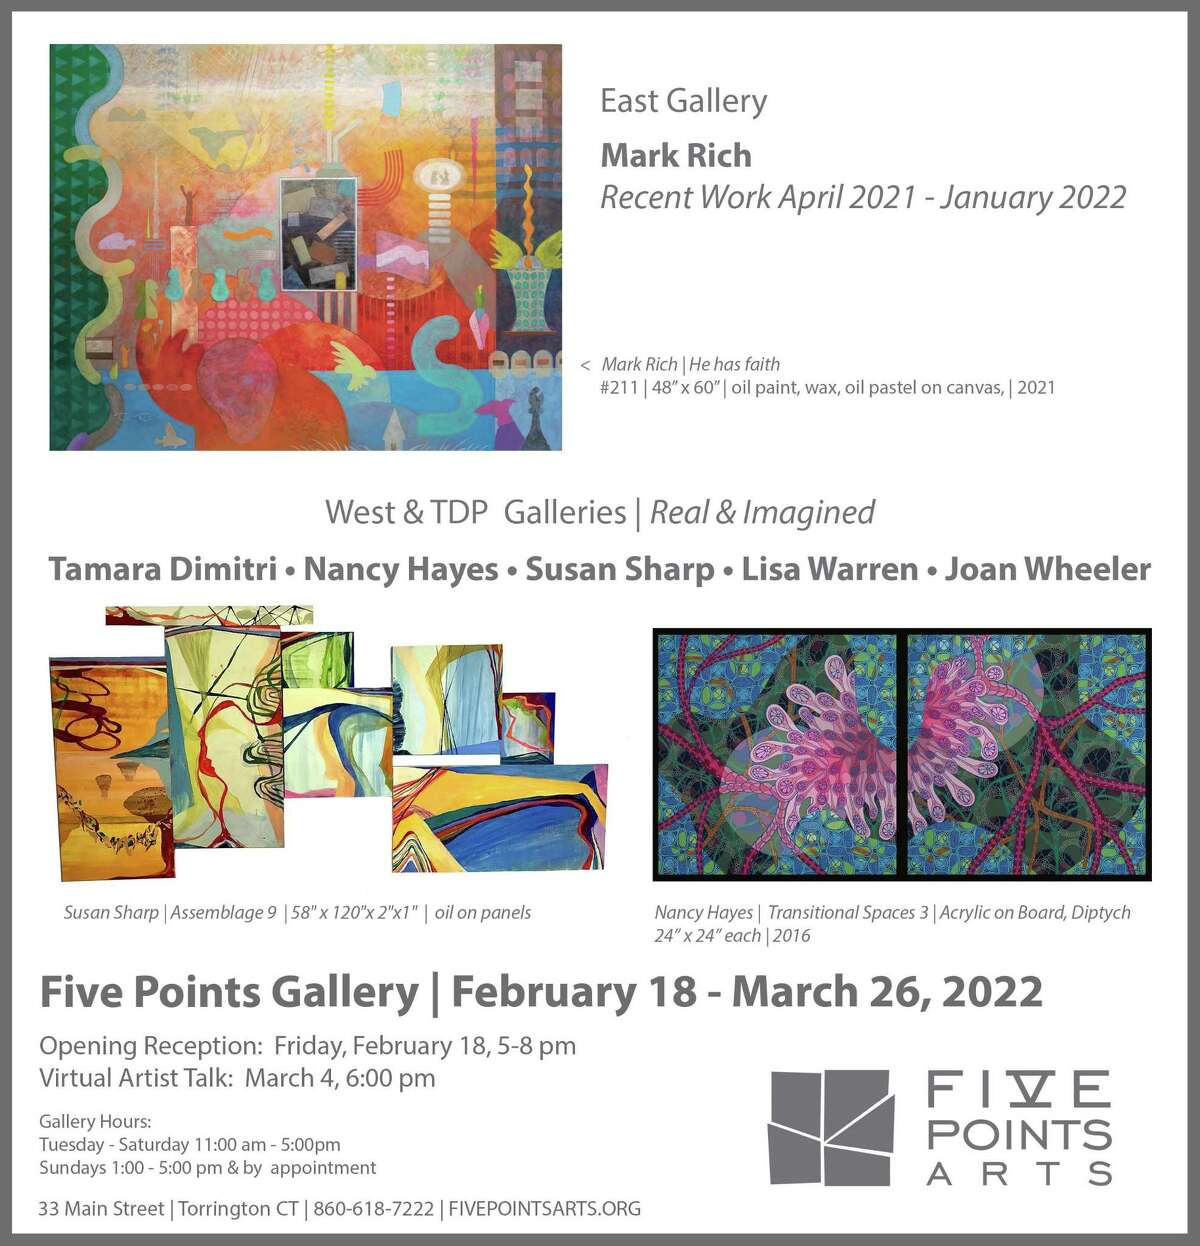 Opening Feb. 18 at Five Points Gallery: “Real & Imagined”, Joan Wheeler, Lisa Warren, Nancy Hayes, Susan Sharp, Tamara Dimitri; Also showing: Mark Rich: Recent Work April 2021 - January 2022.